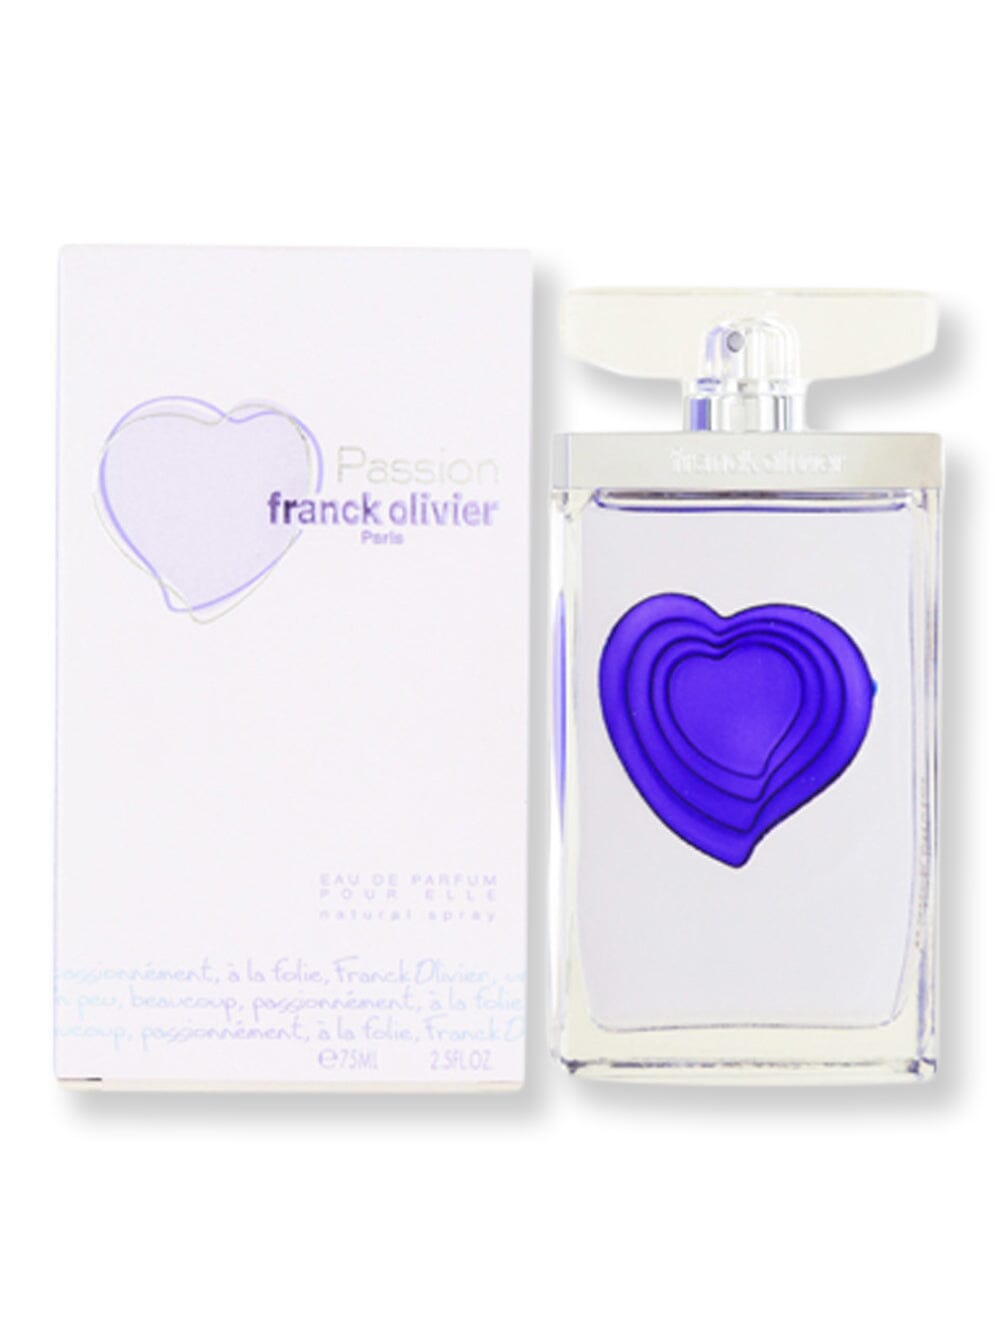 Franck Olivier Franck Olivier Passion Pour Elle EDP Spray 2.5 oz75 ml Perfume 